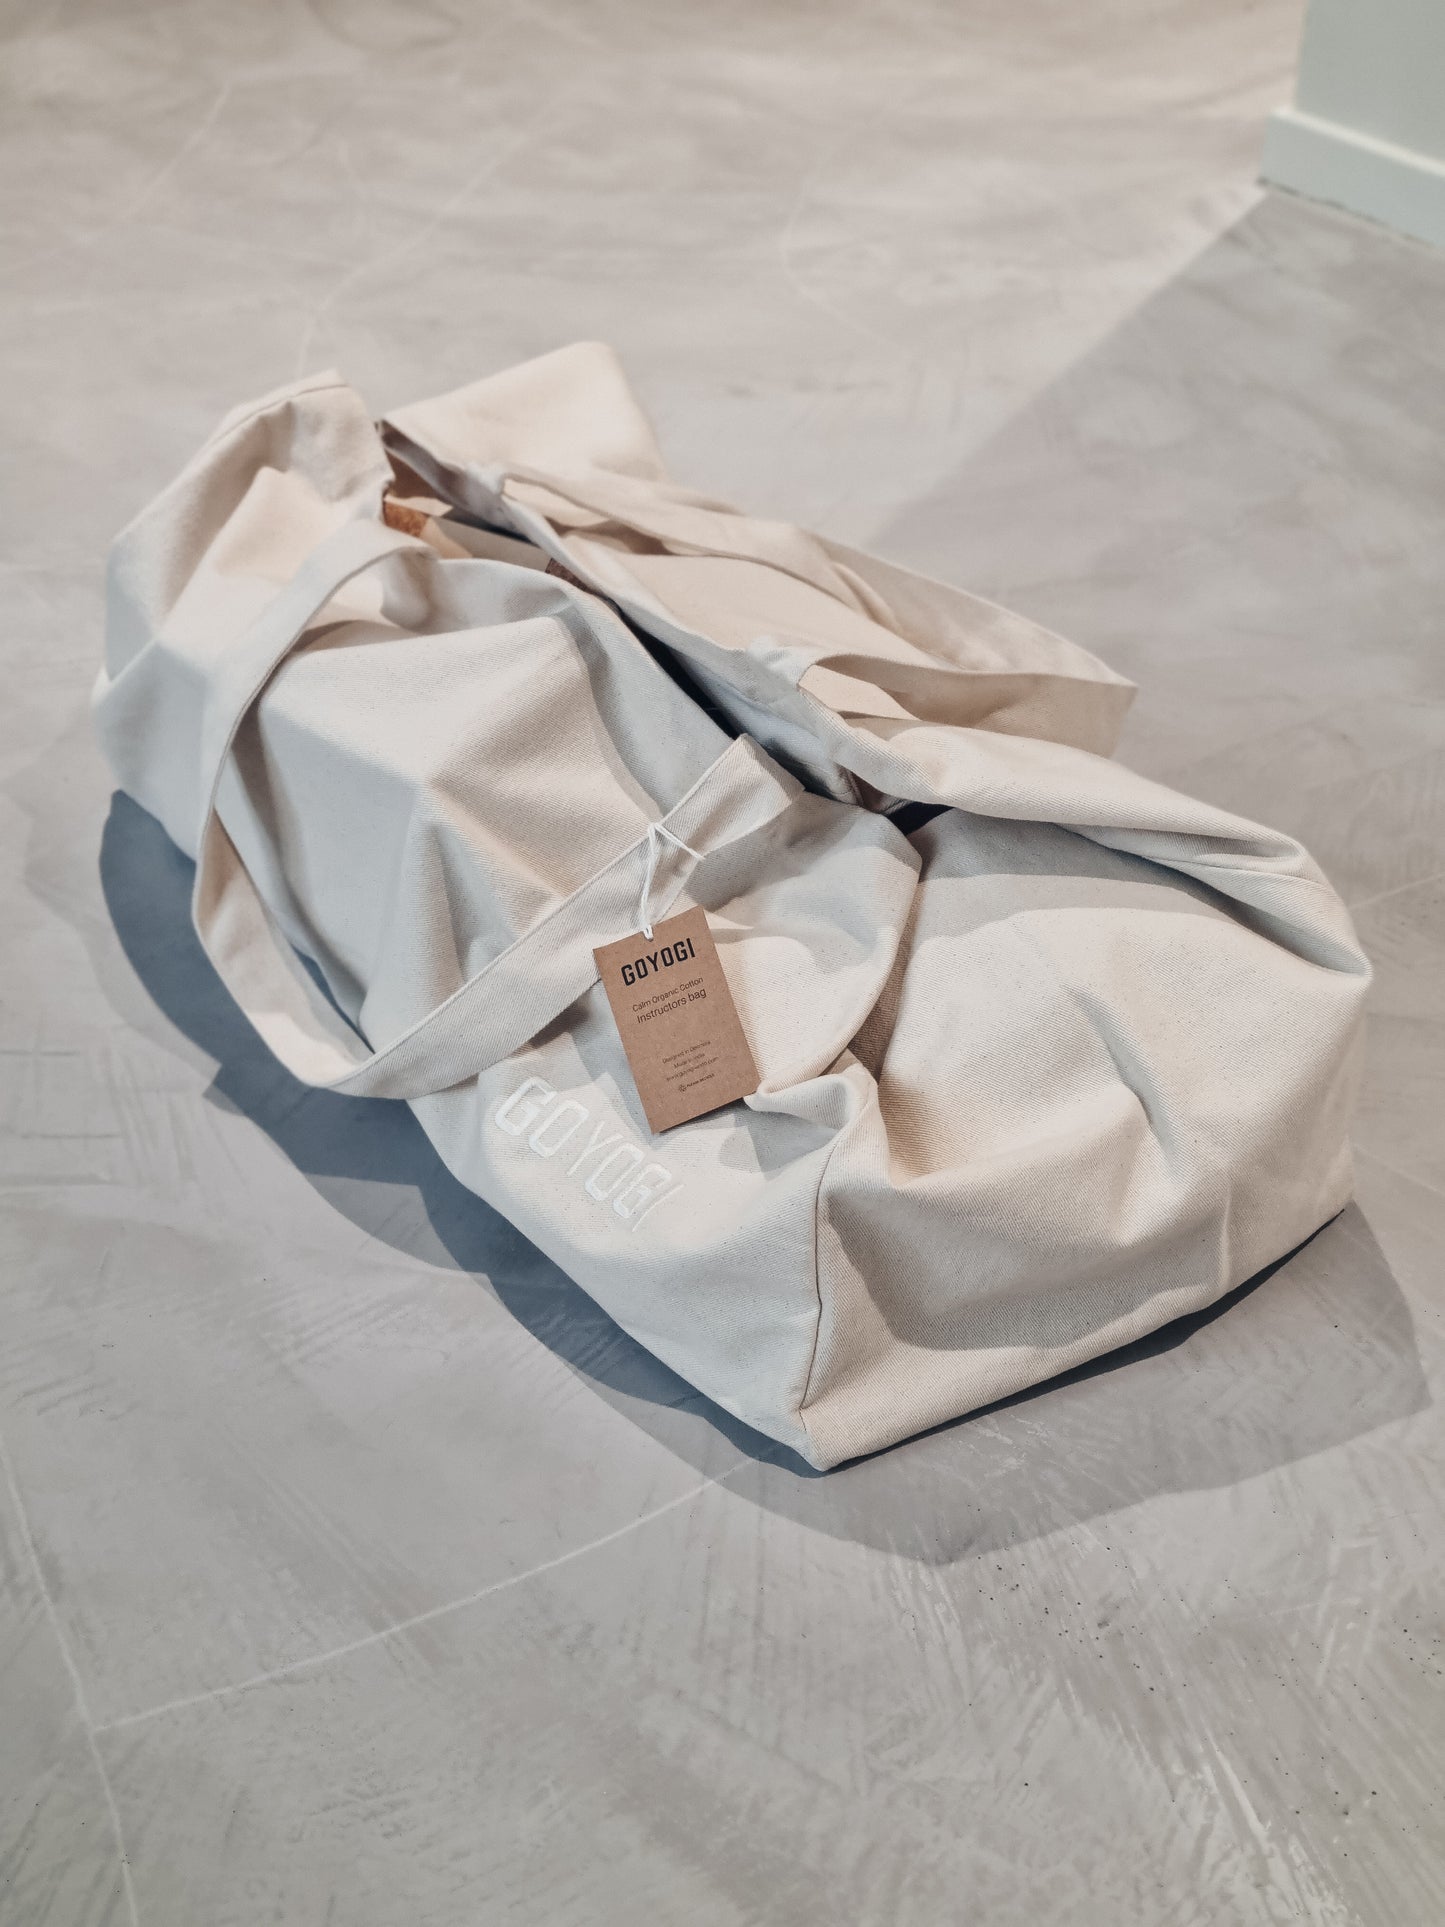 Calm Organic Cotton Instructor Bag - Natural - GOYOGI goyogi yogataske 